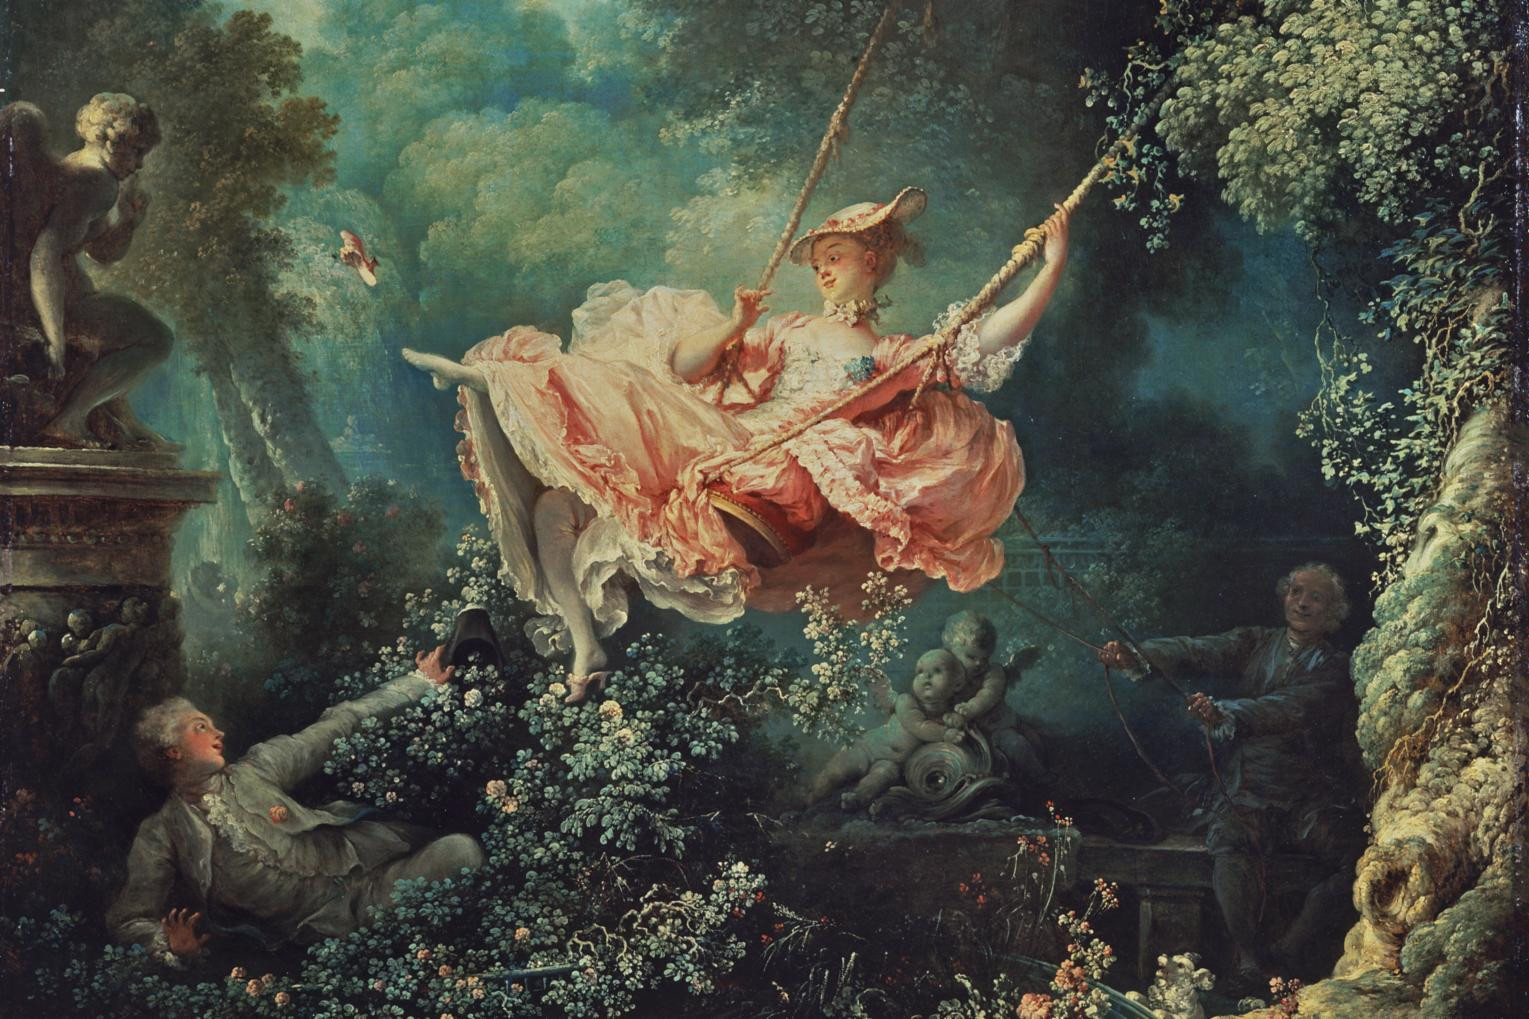 Jean-Honoré Fragonard “The Swing”, 1767